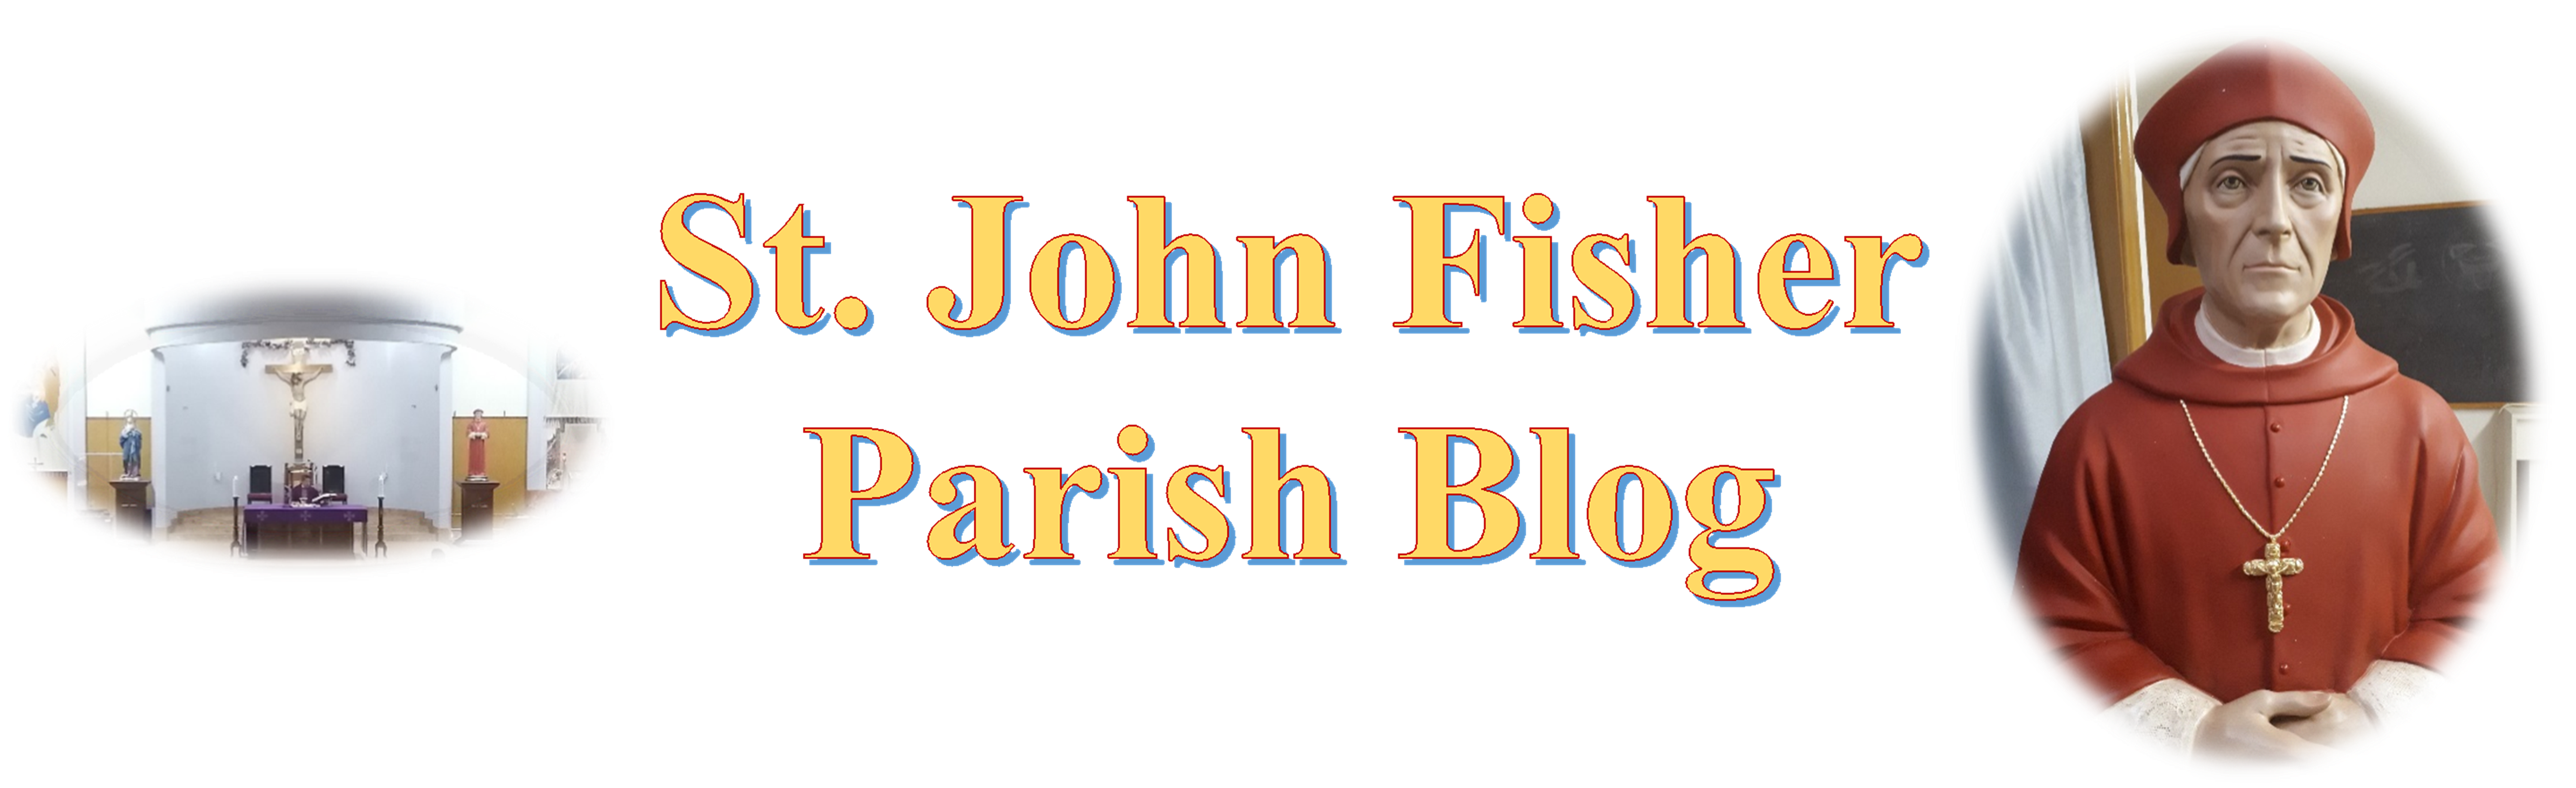 St John Fisher Parish Blog banner